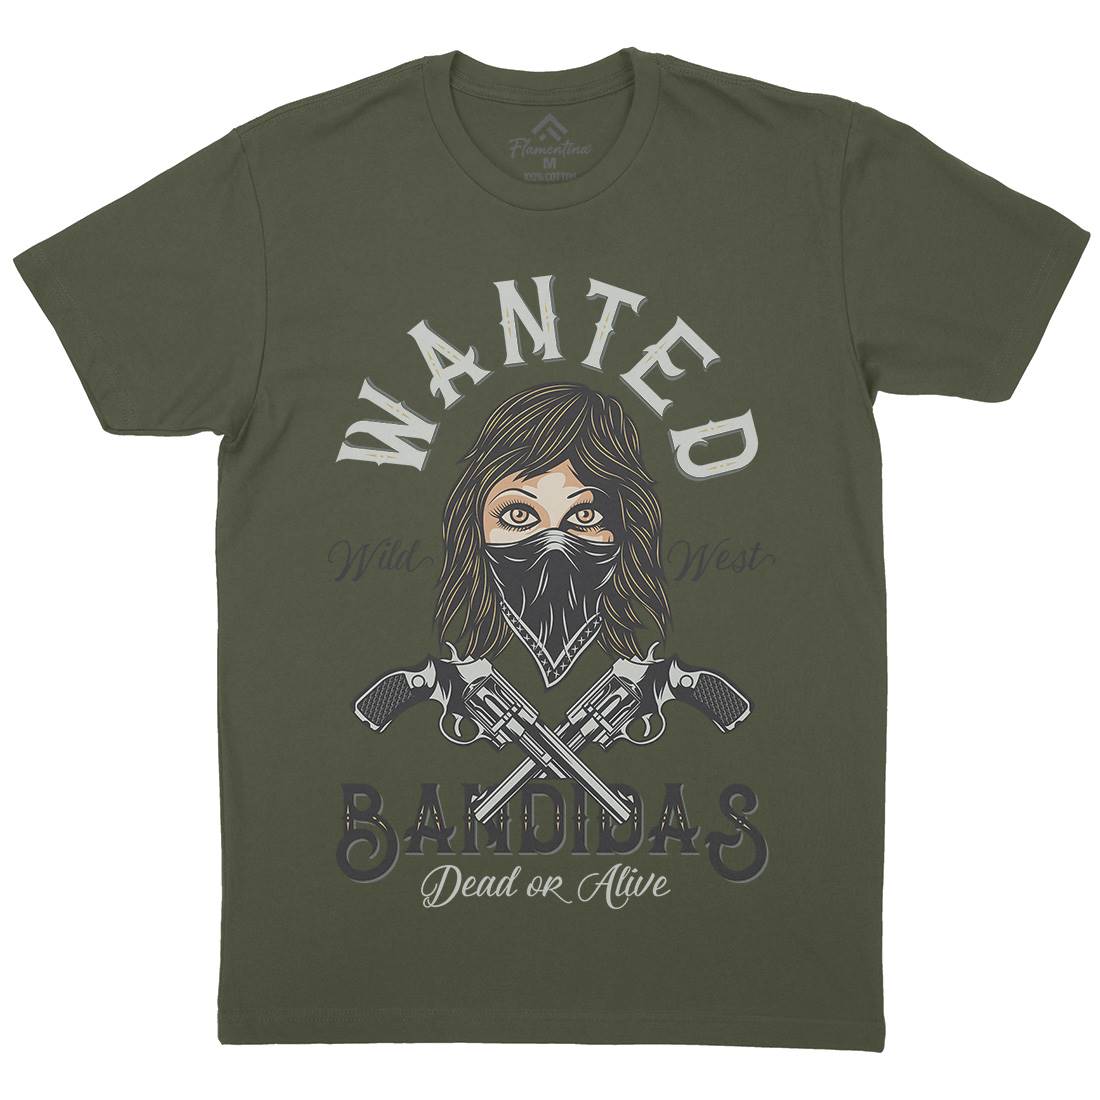 Wanted Bandidas Mens Organic Crew Neck T-Shirt Retro D995